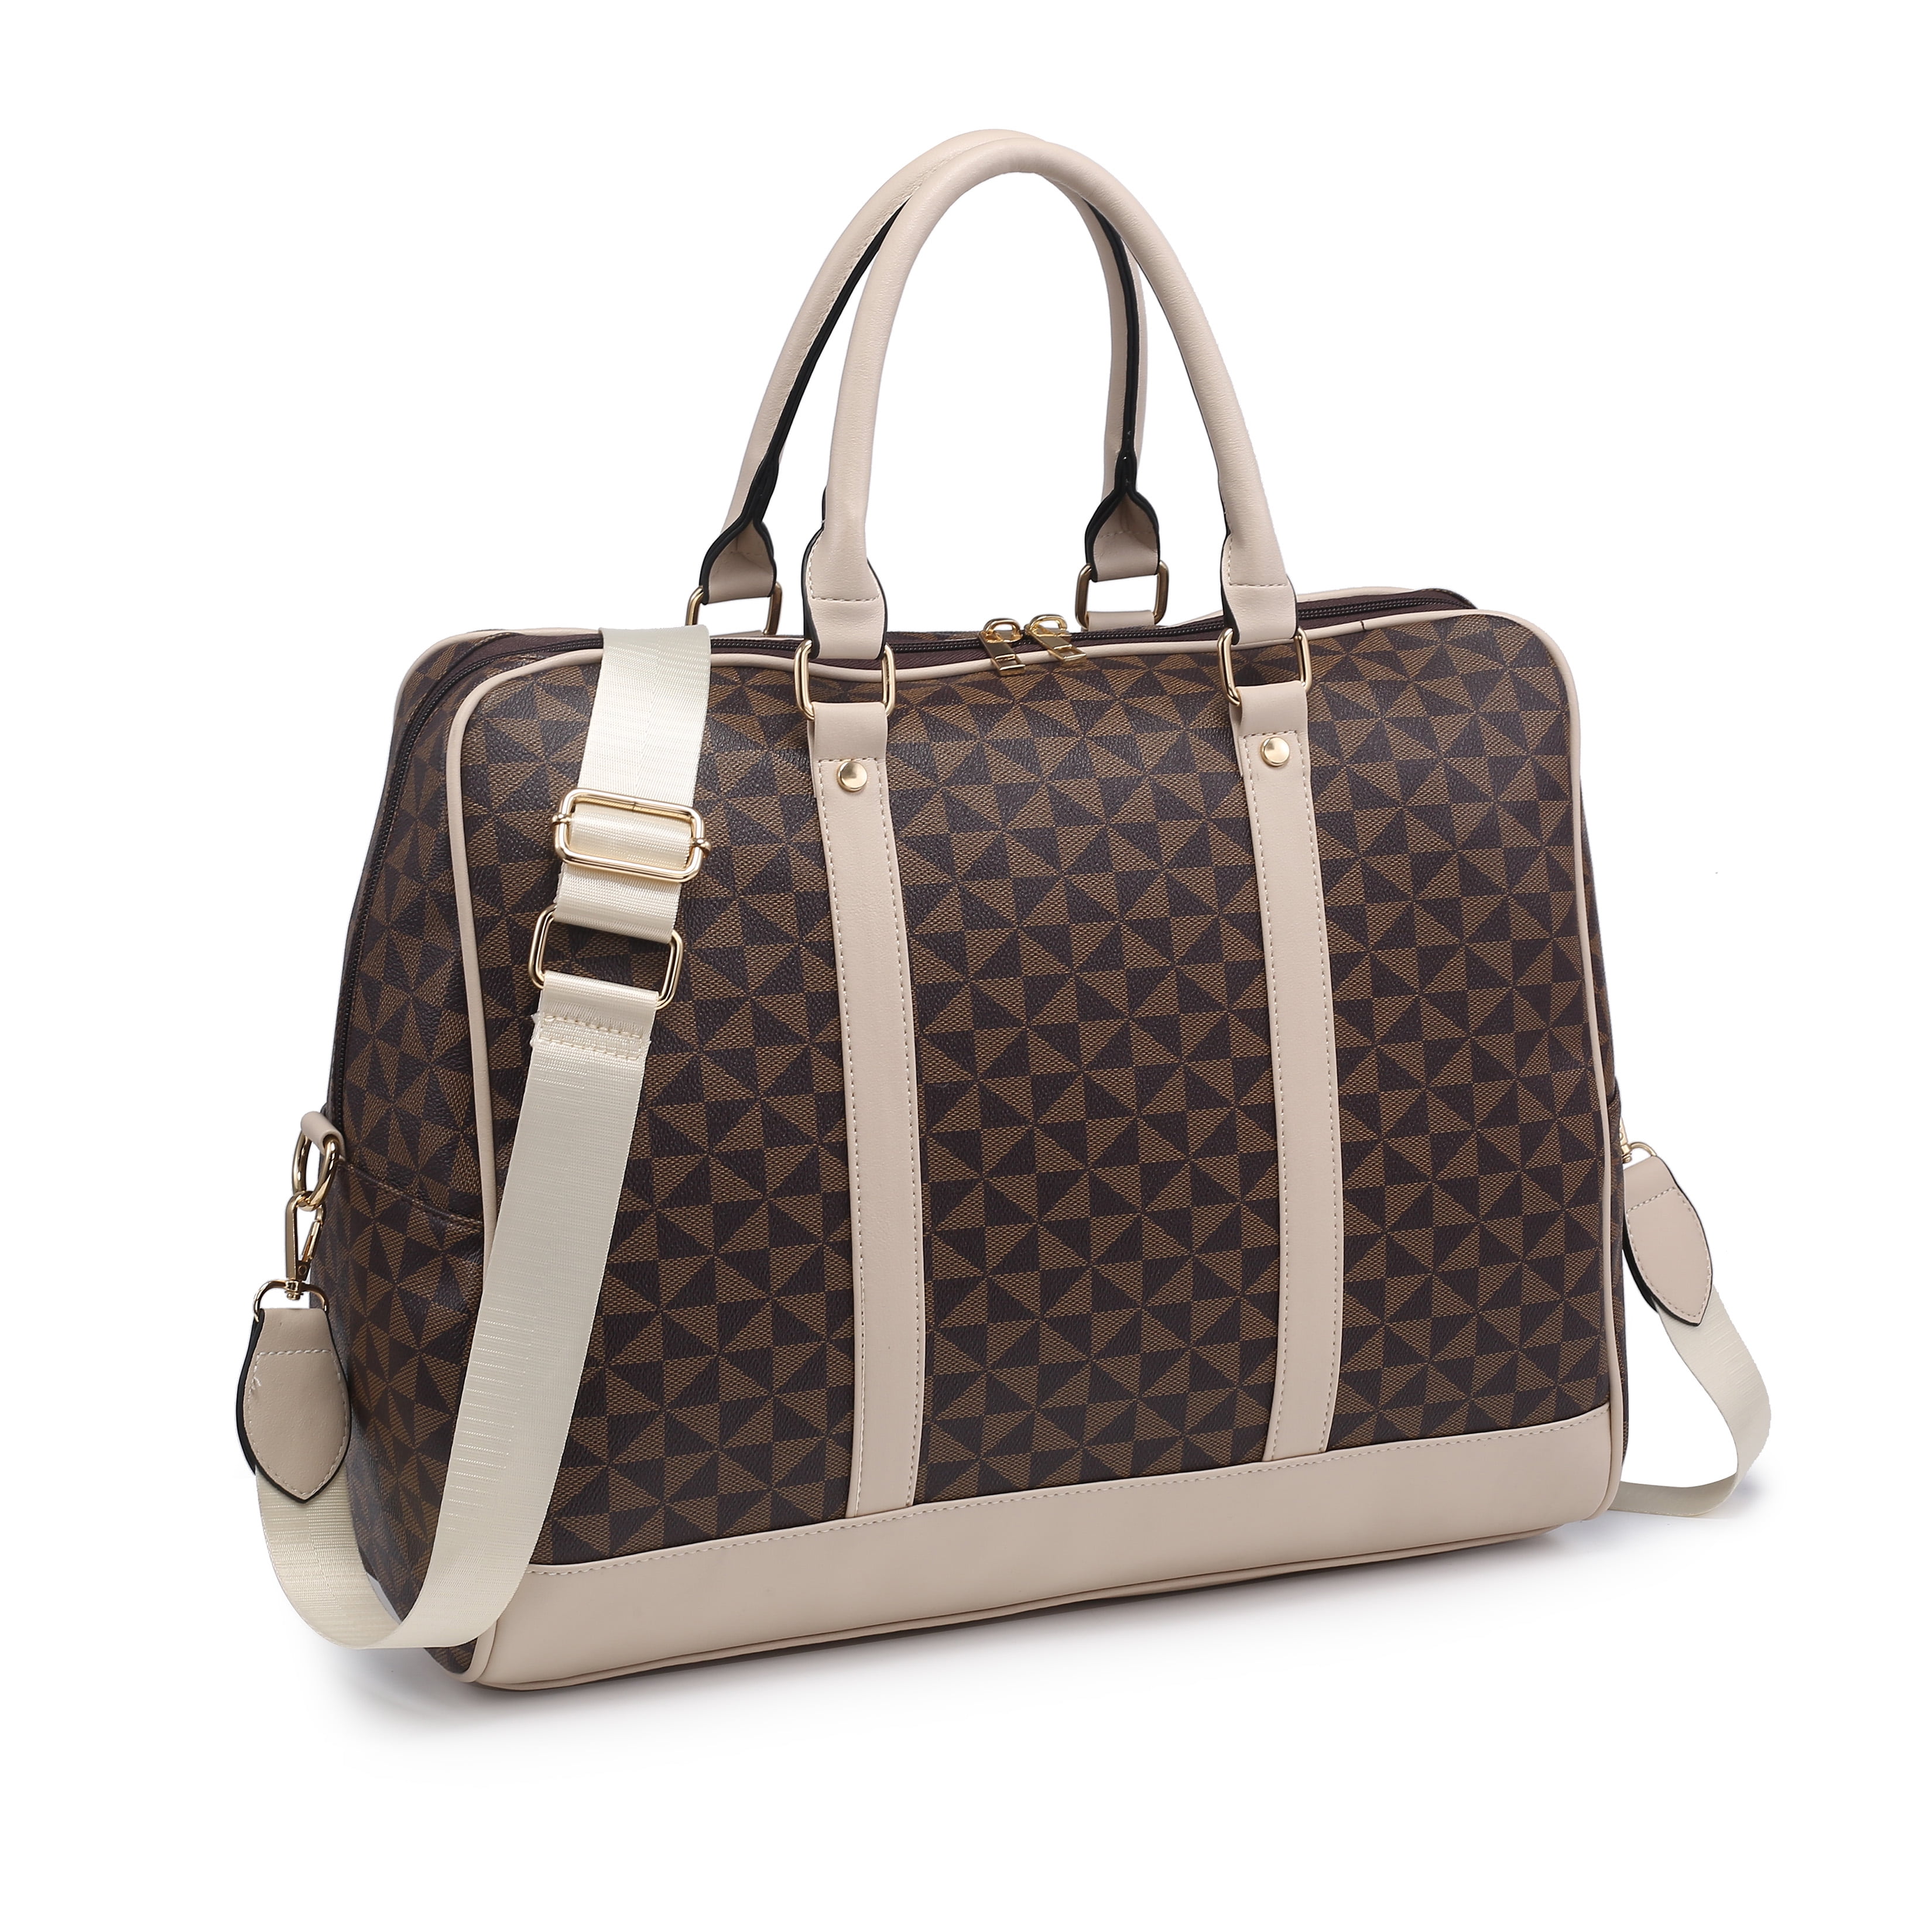 XB Travel Duffle Bag for Women & Men Vegan Leather Overnight Weekender  Luggage Tote Bag Large Handbag